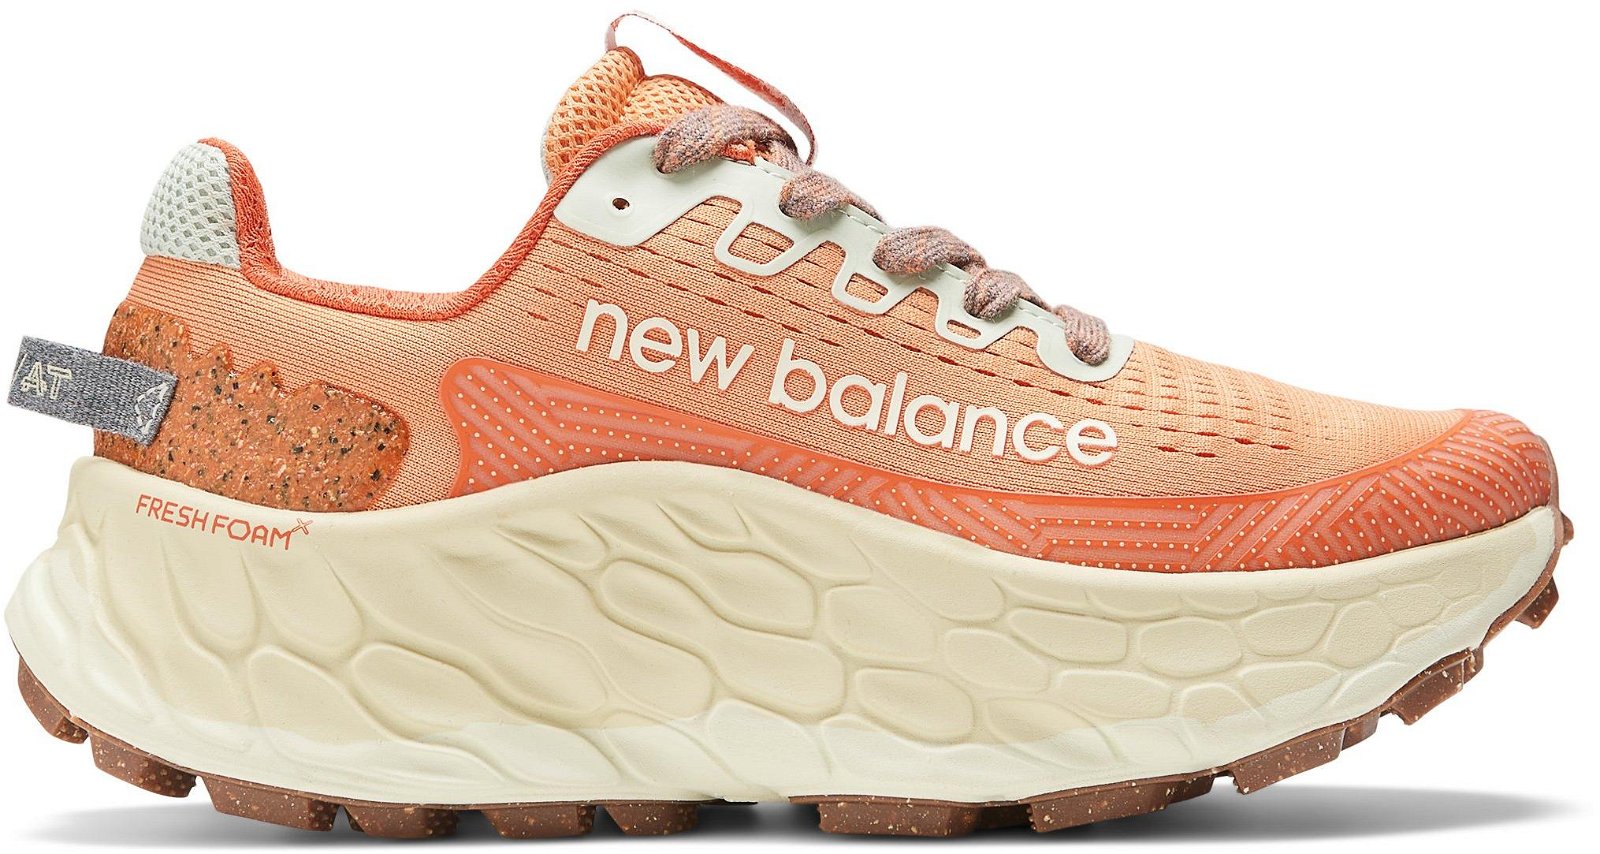 New Balance Zapatillas Running Mujer - Hierro v7 - Daydream/Cayenne